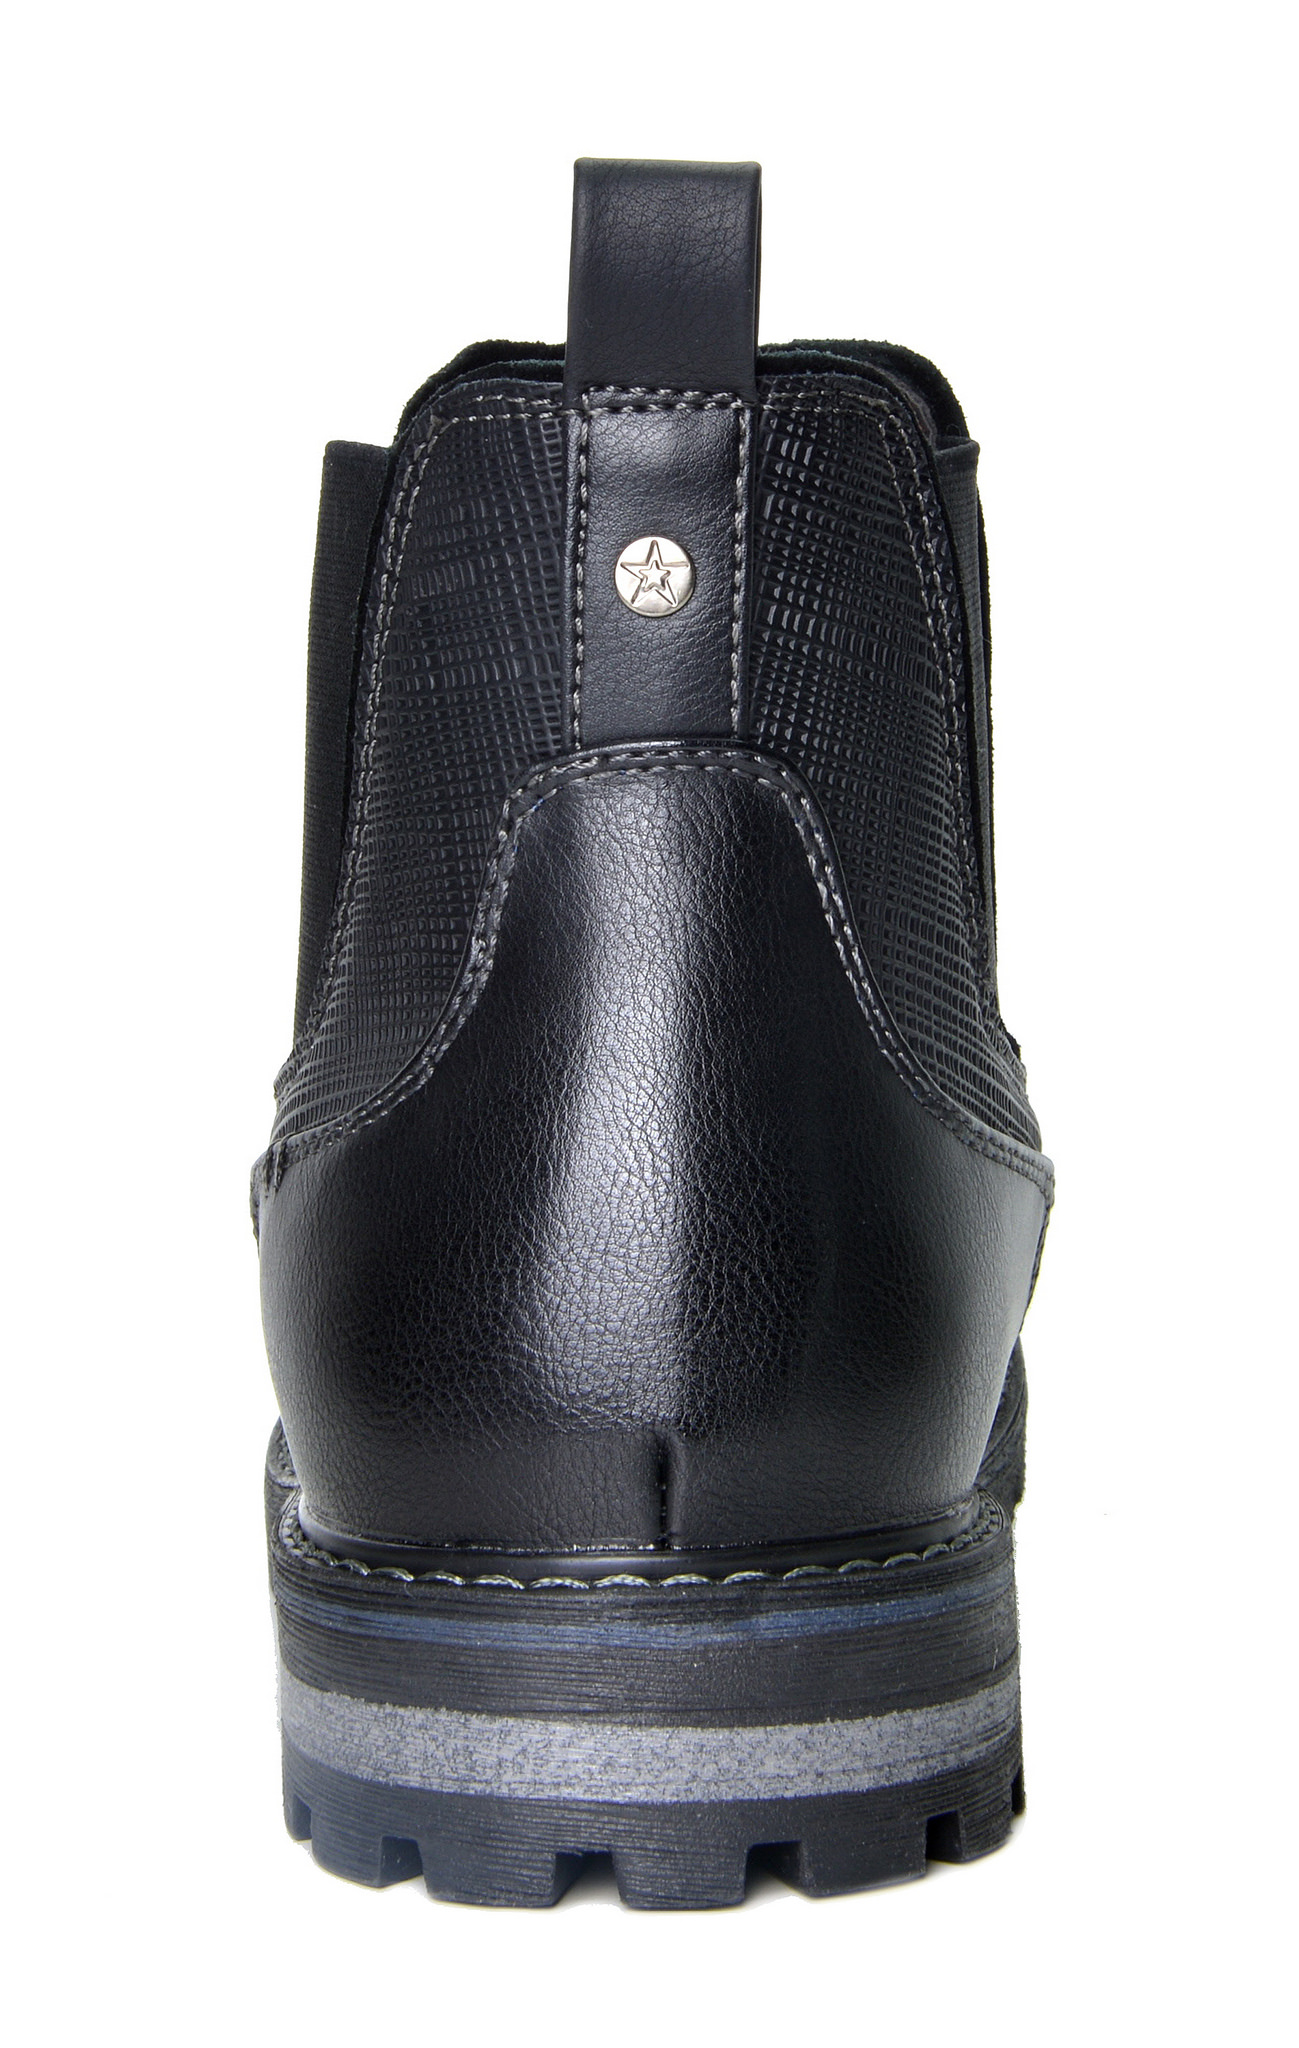 Bruno Marc Men Chelsea Ankle Boots Men's Casual Faux Leather Boots Shoes Plain Toe Slip On Desert Boots ENGLE-03 BLACK Size 8.5 - image 4 of 5